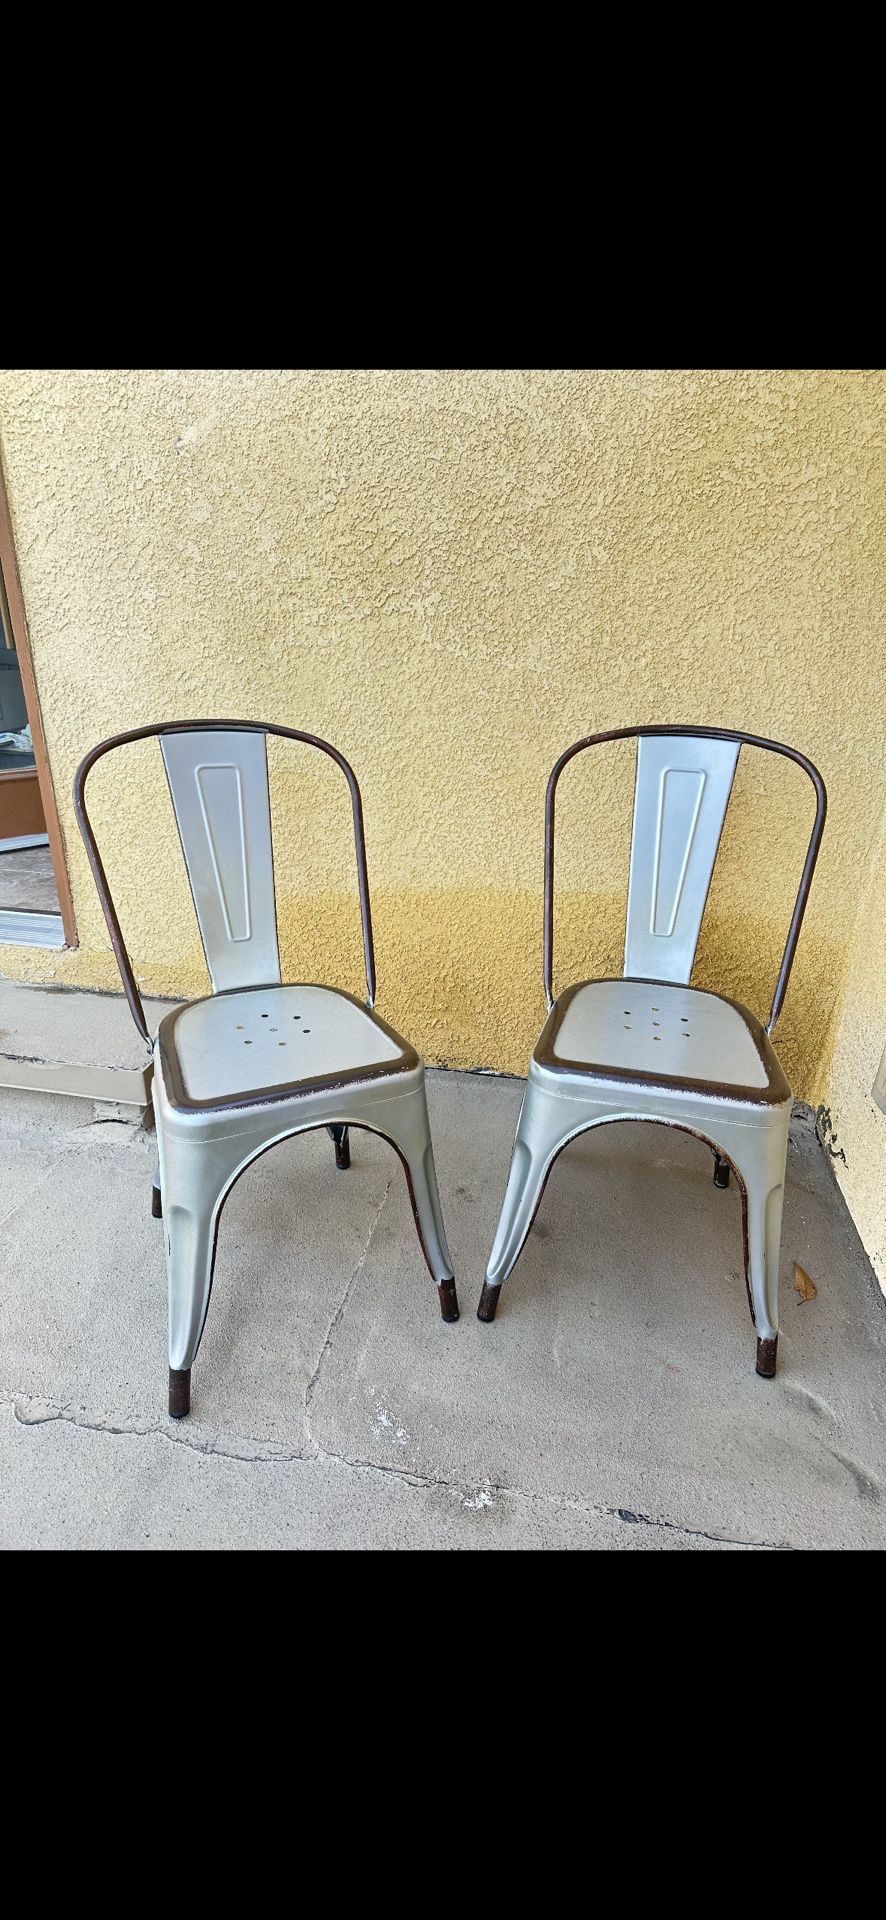 Two Nice Chairs 